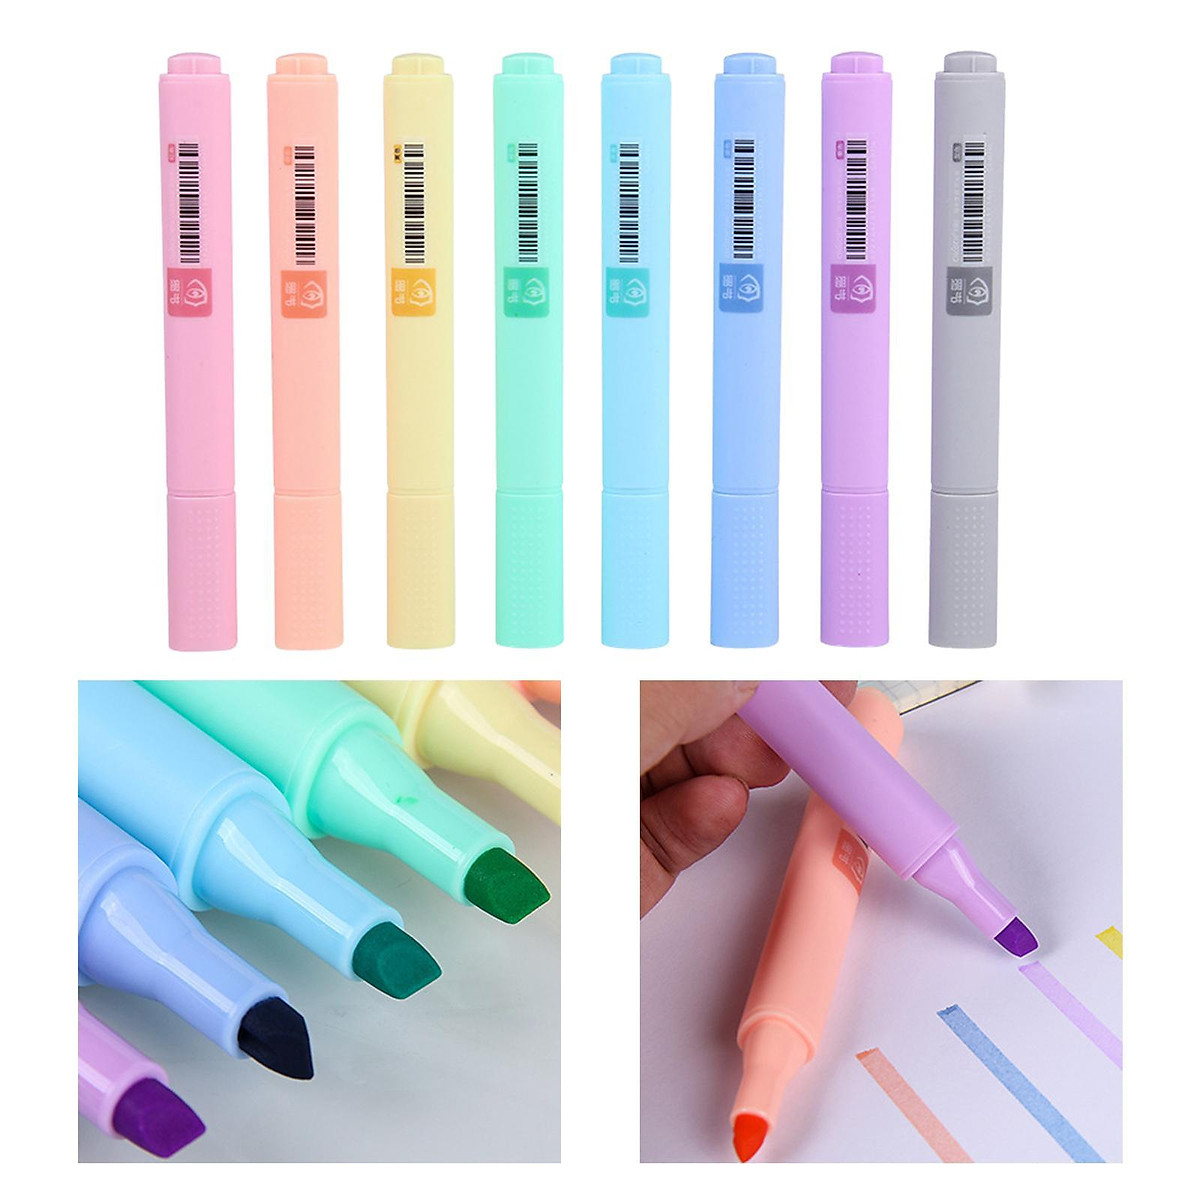 Take Note Dual Tip Highlighter Pens, 6 Count | Crayola.com | Crayola